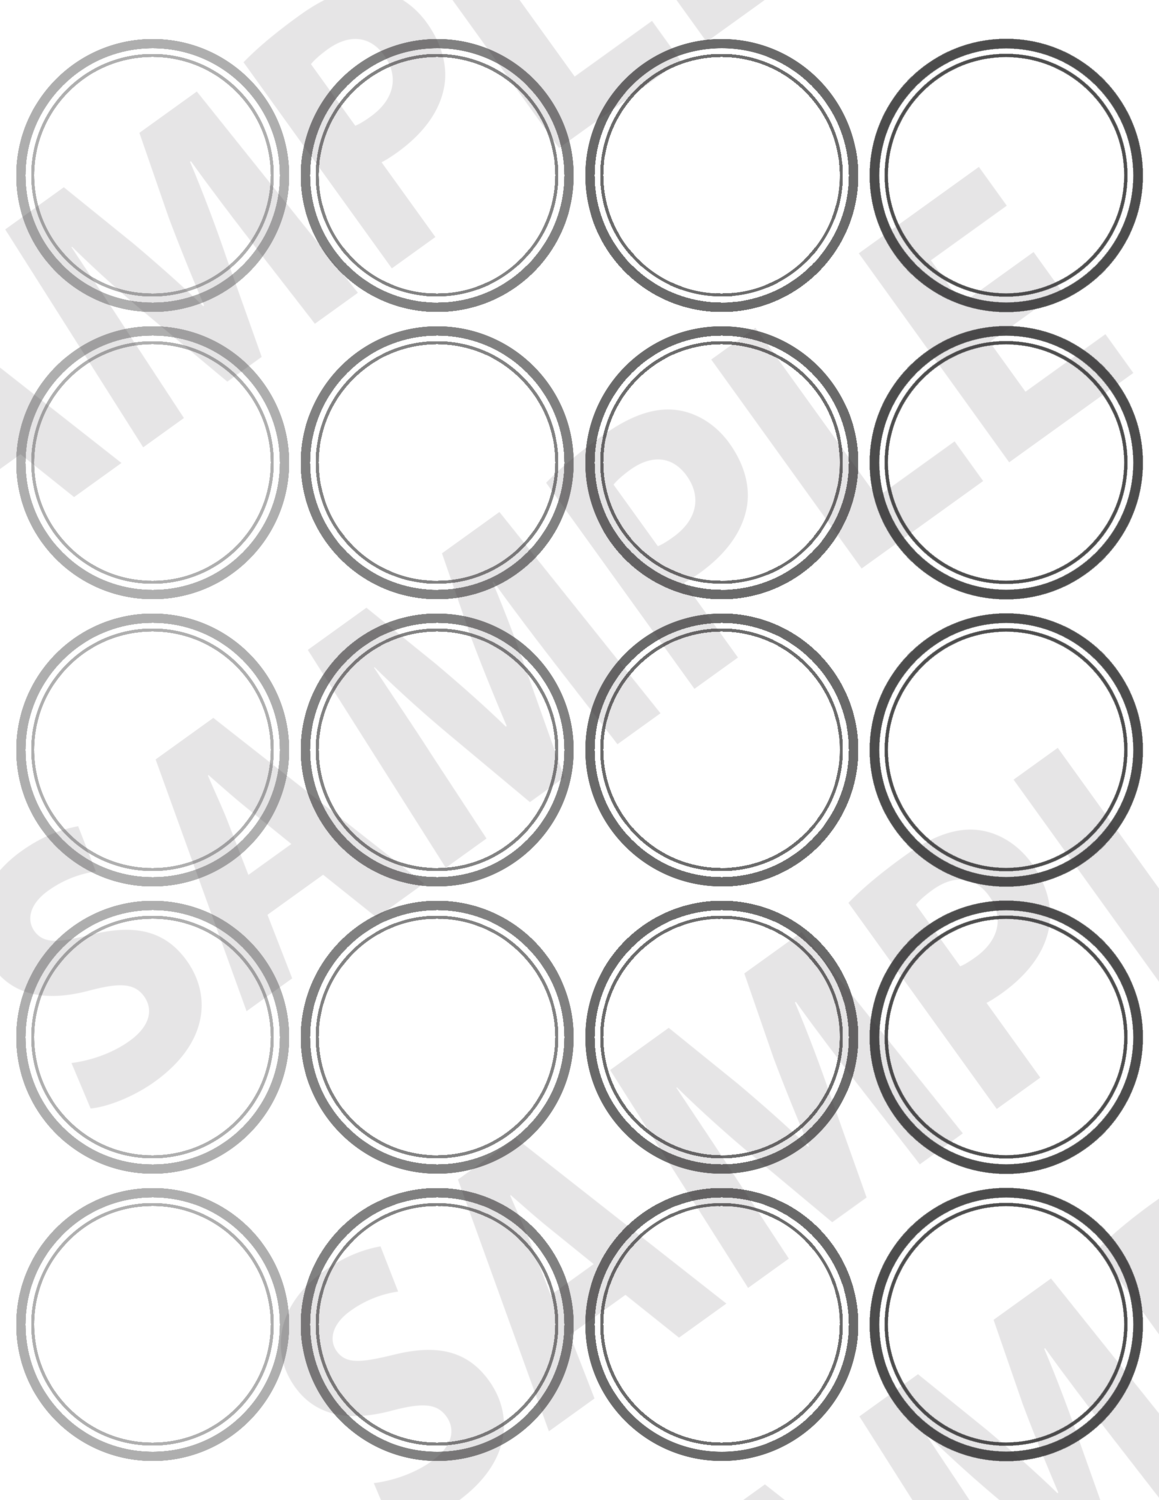 Light Gray - 2 Inch Circular Labels Embellishments